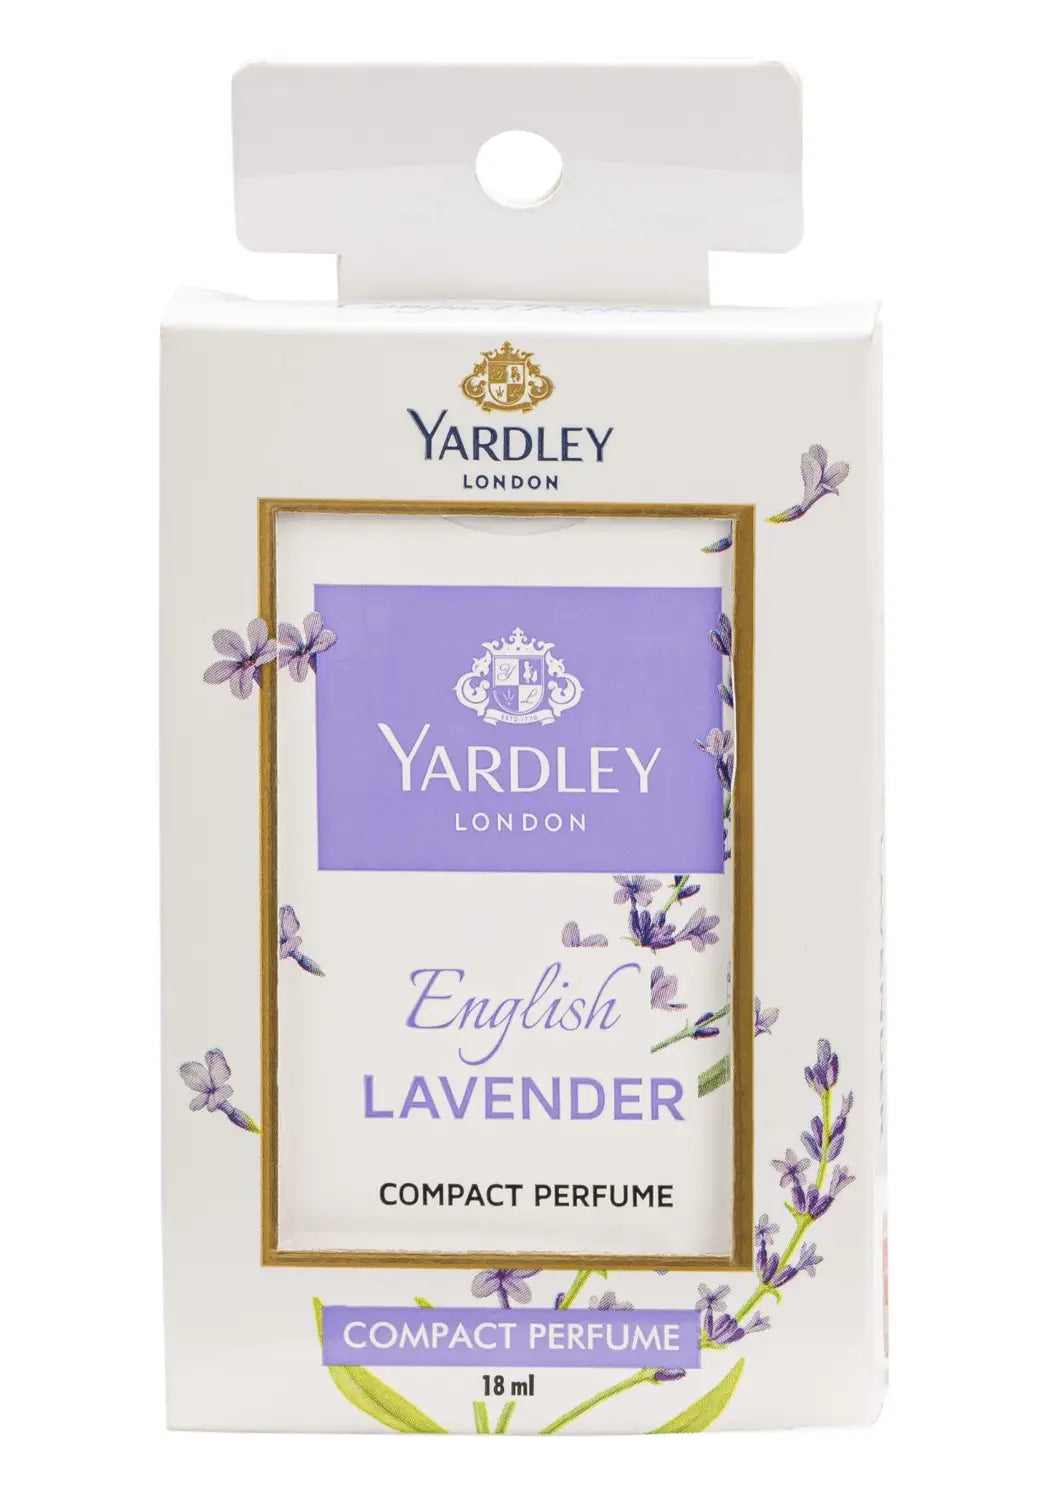 Yardley London English Lavender Compact Perfume